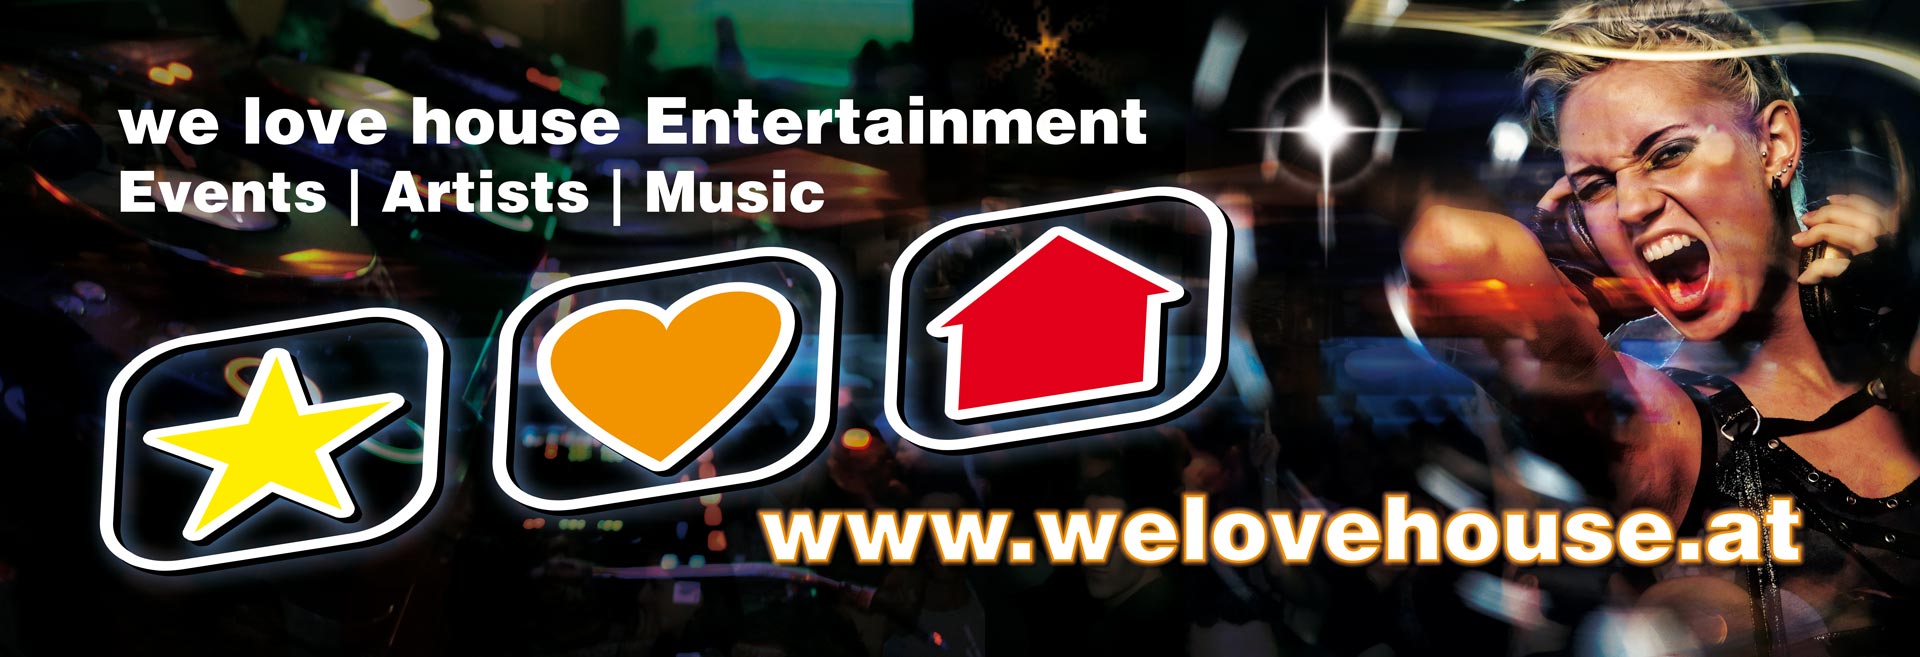 Logo we love house Entertainment